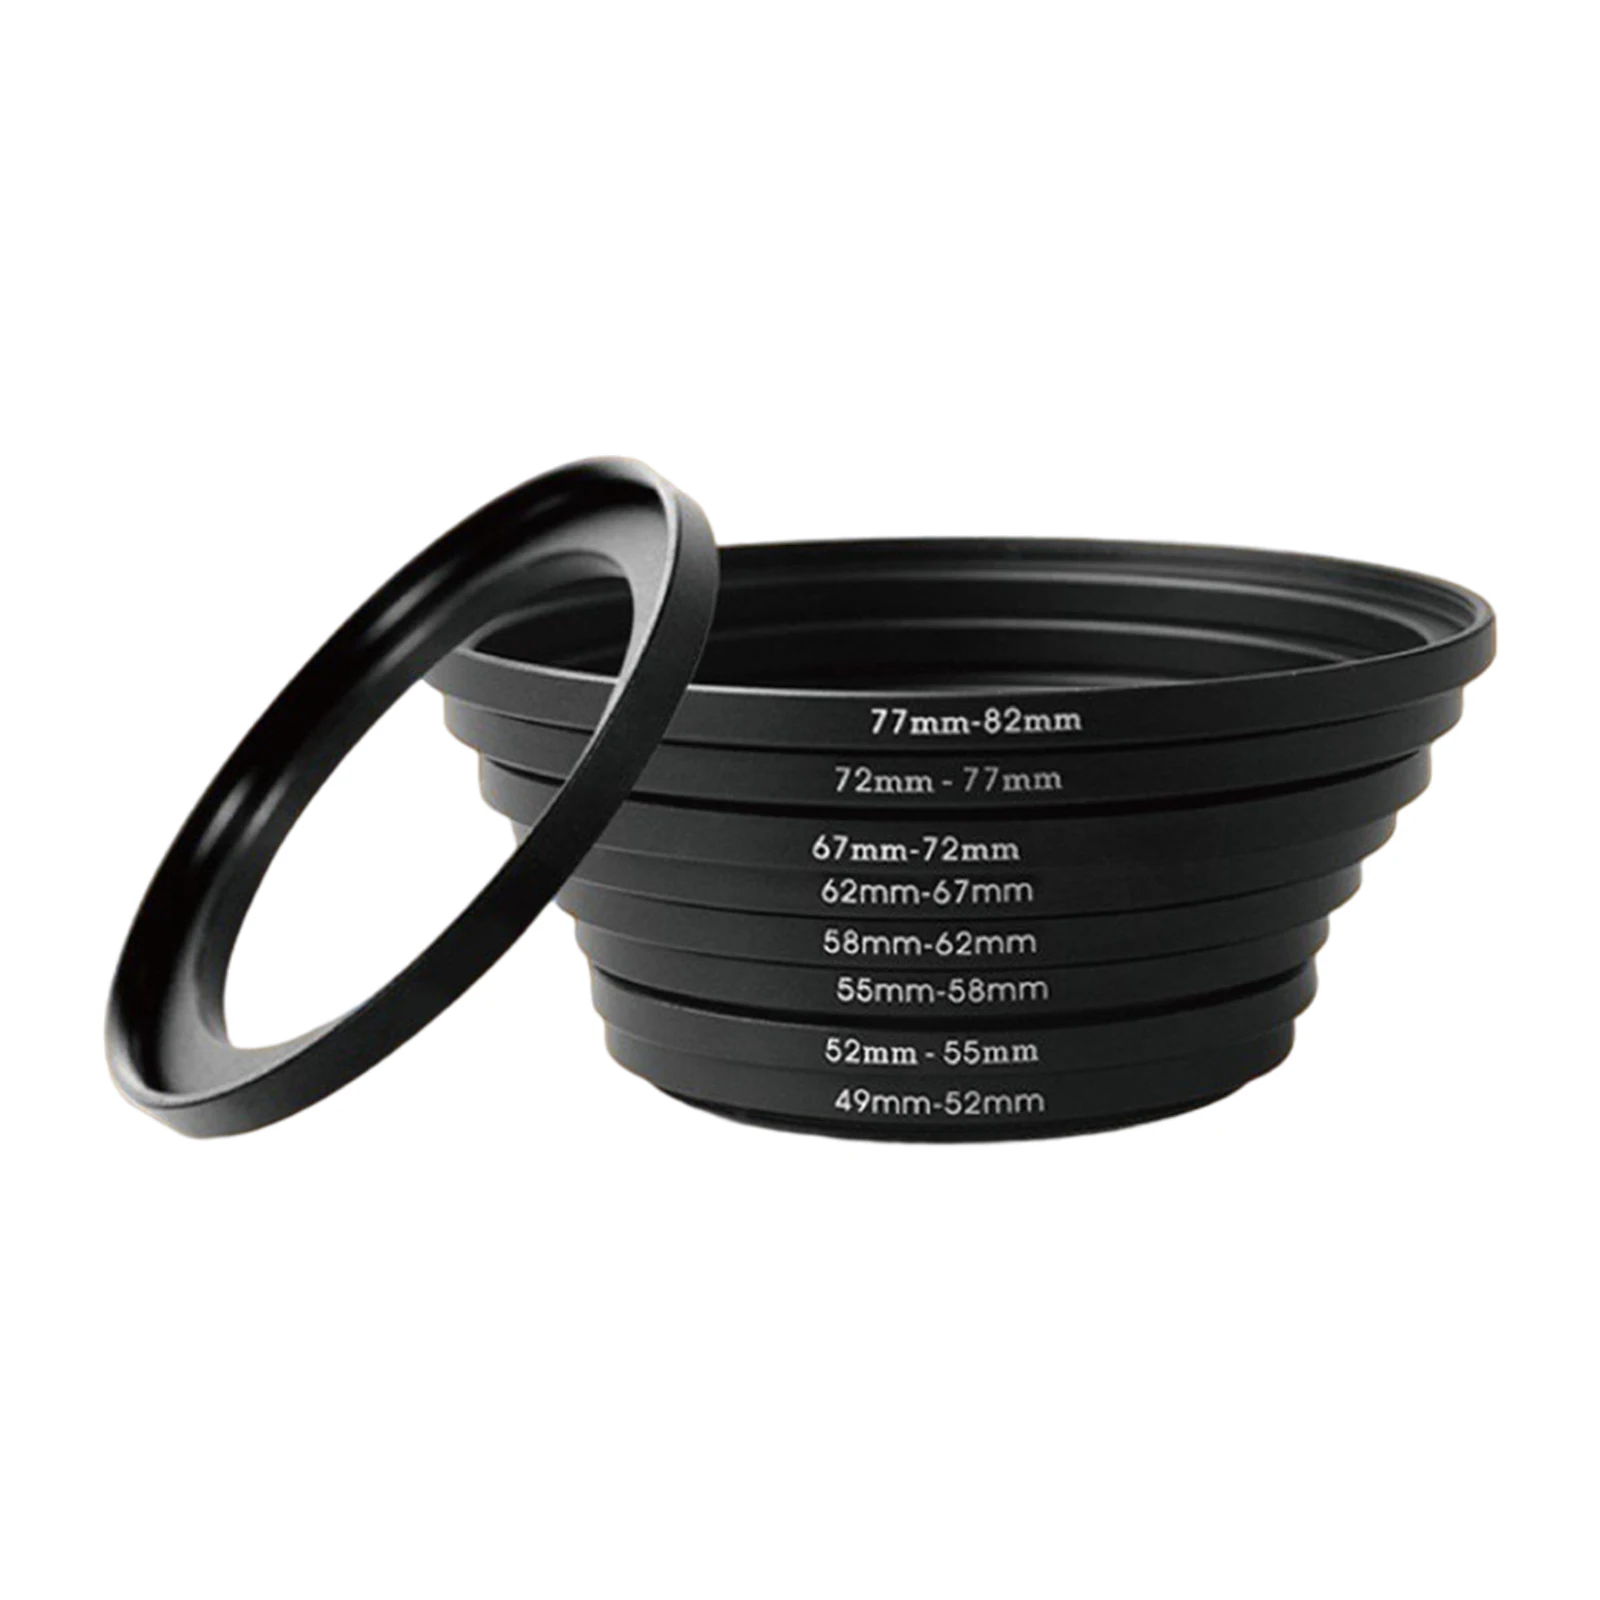 8 Pieces Aluminum Rings Lens Adapter Filter Kit for DSLR Camera